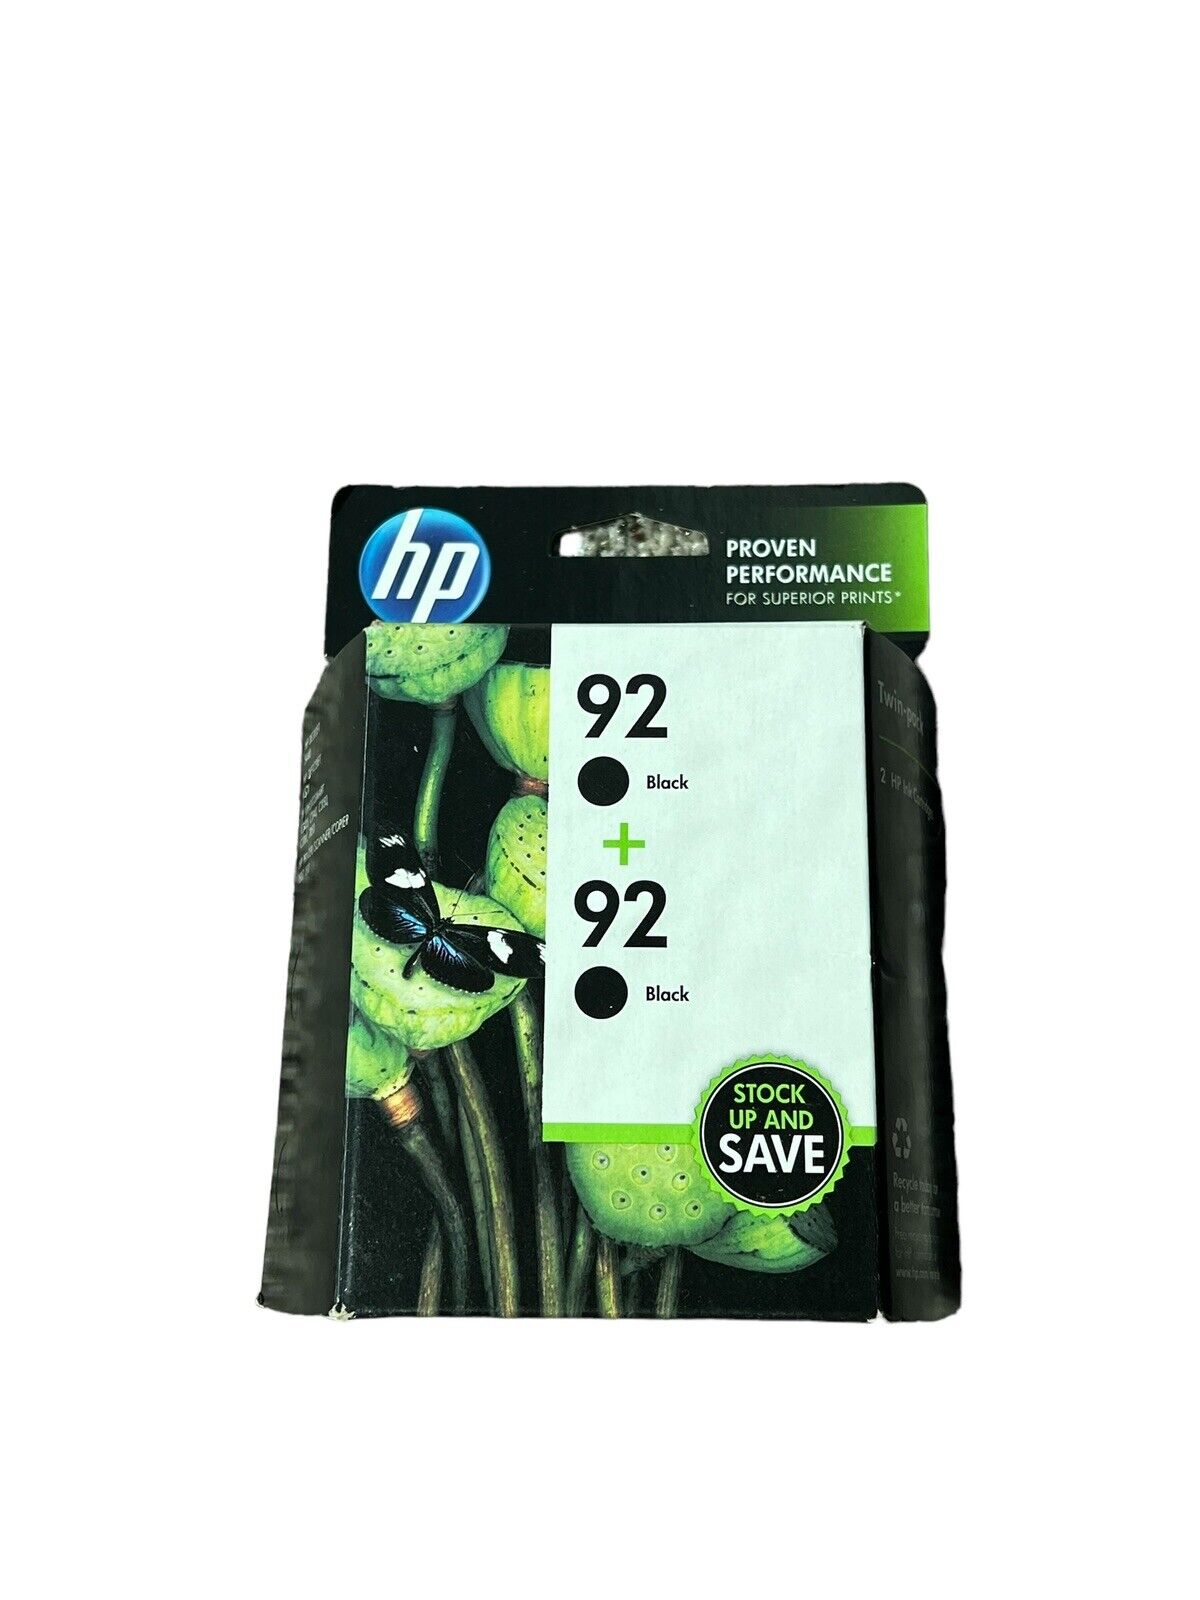 HP 2-Pack of 92 Black Ink Cartridges (Expired)